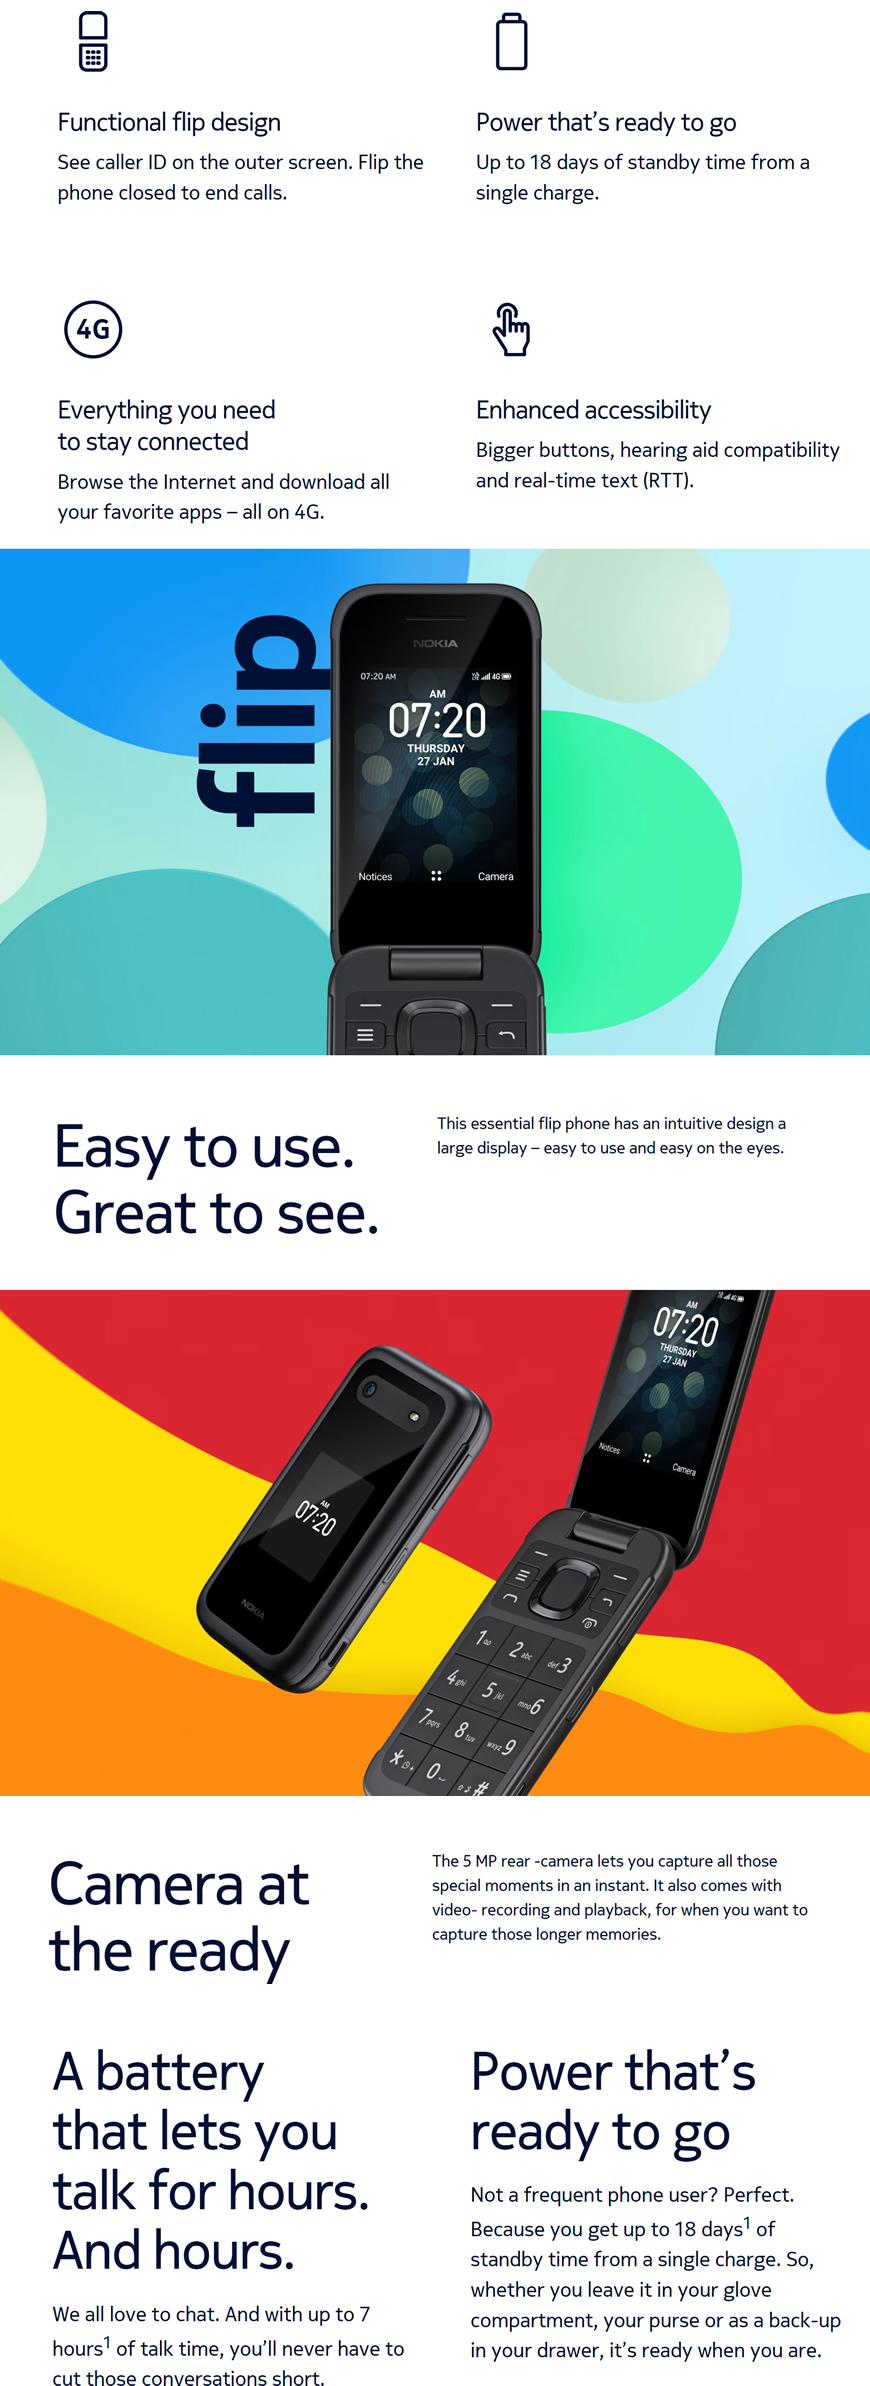 Nokia 2760 Flip features